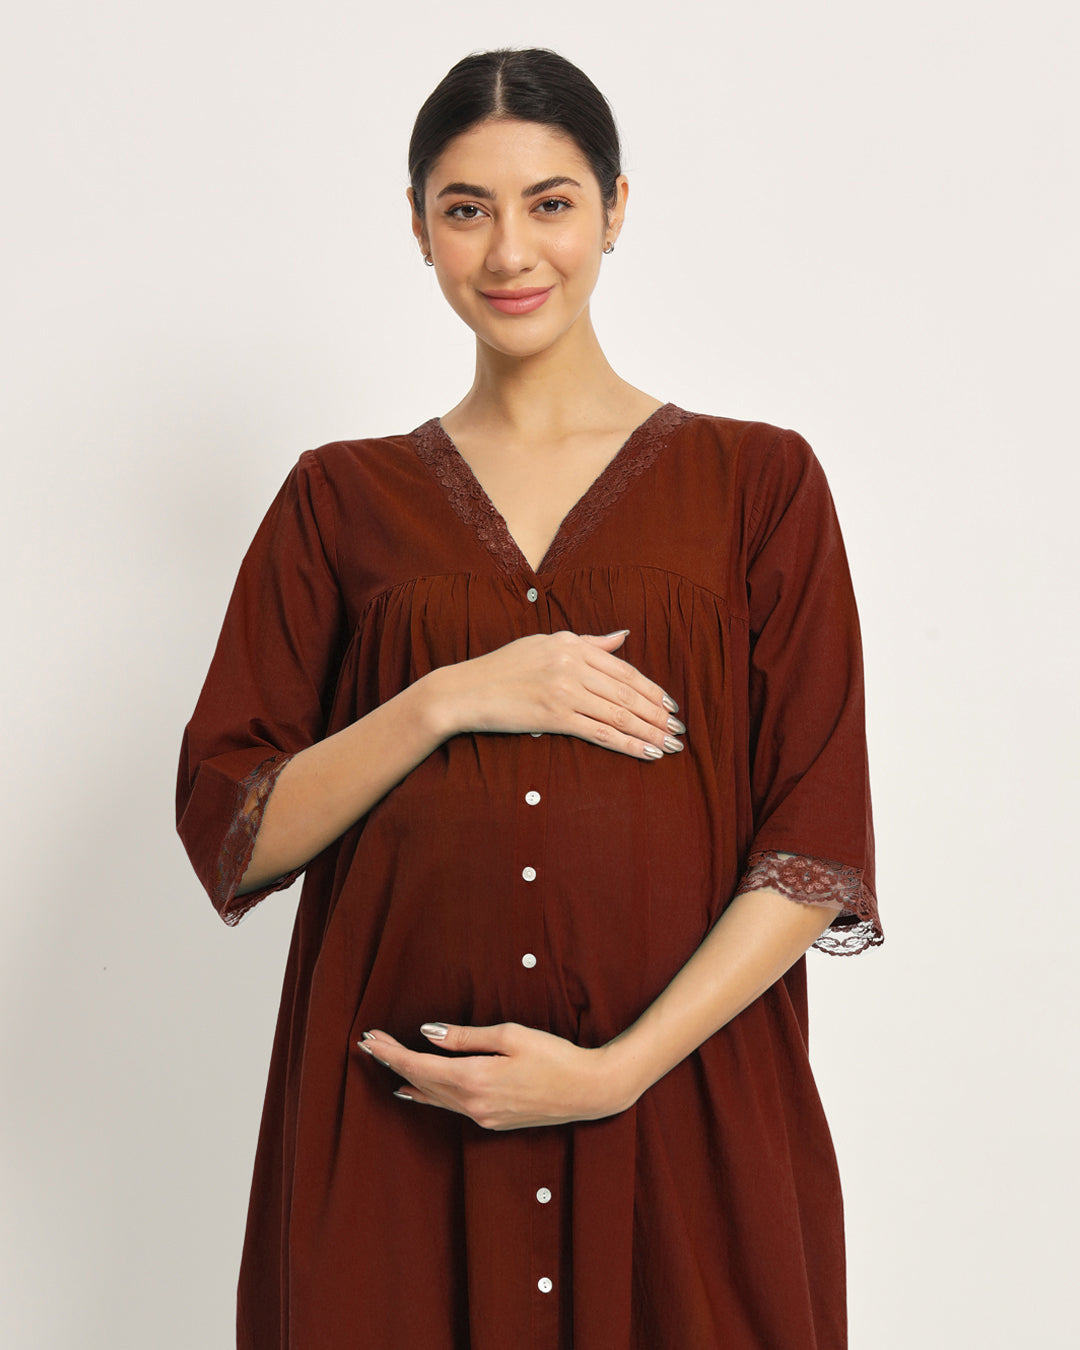 Russet Red Preggo & Posh Maternity & Nursing Dress